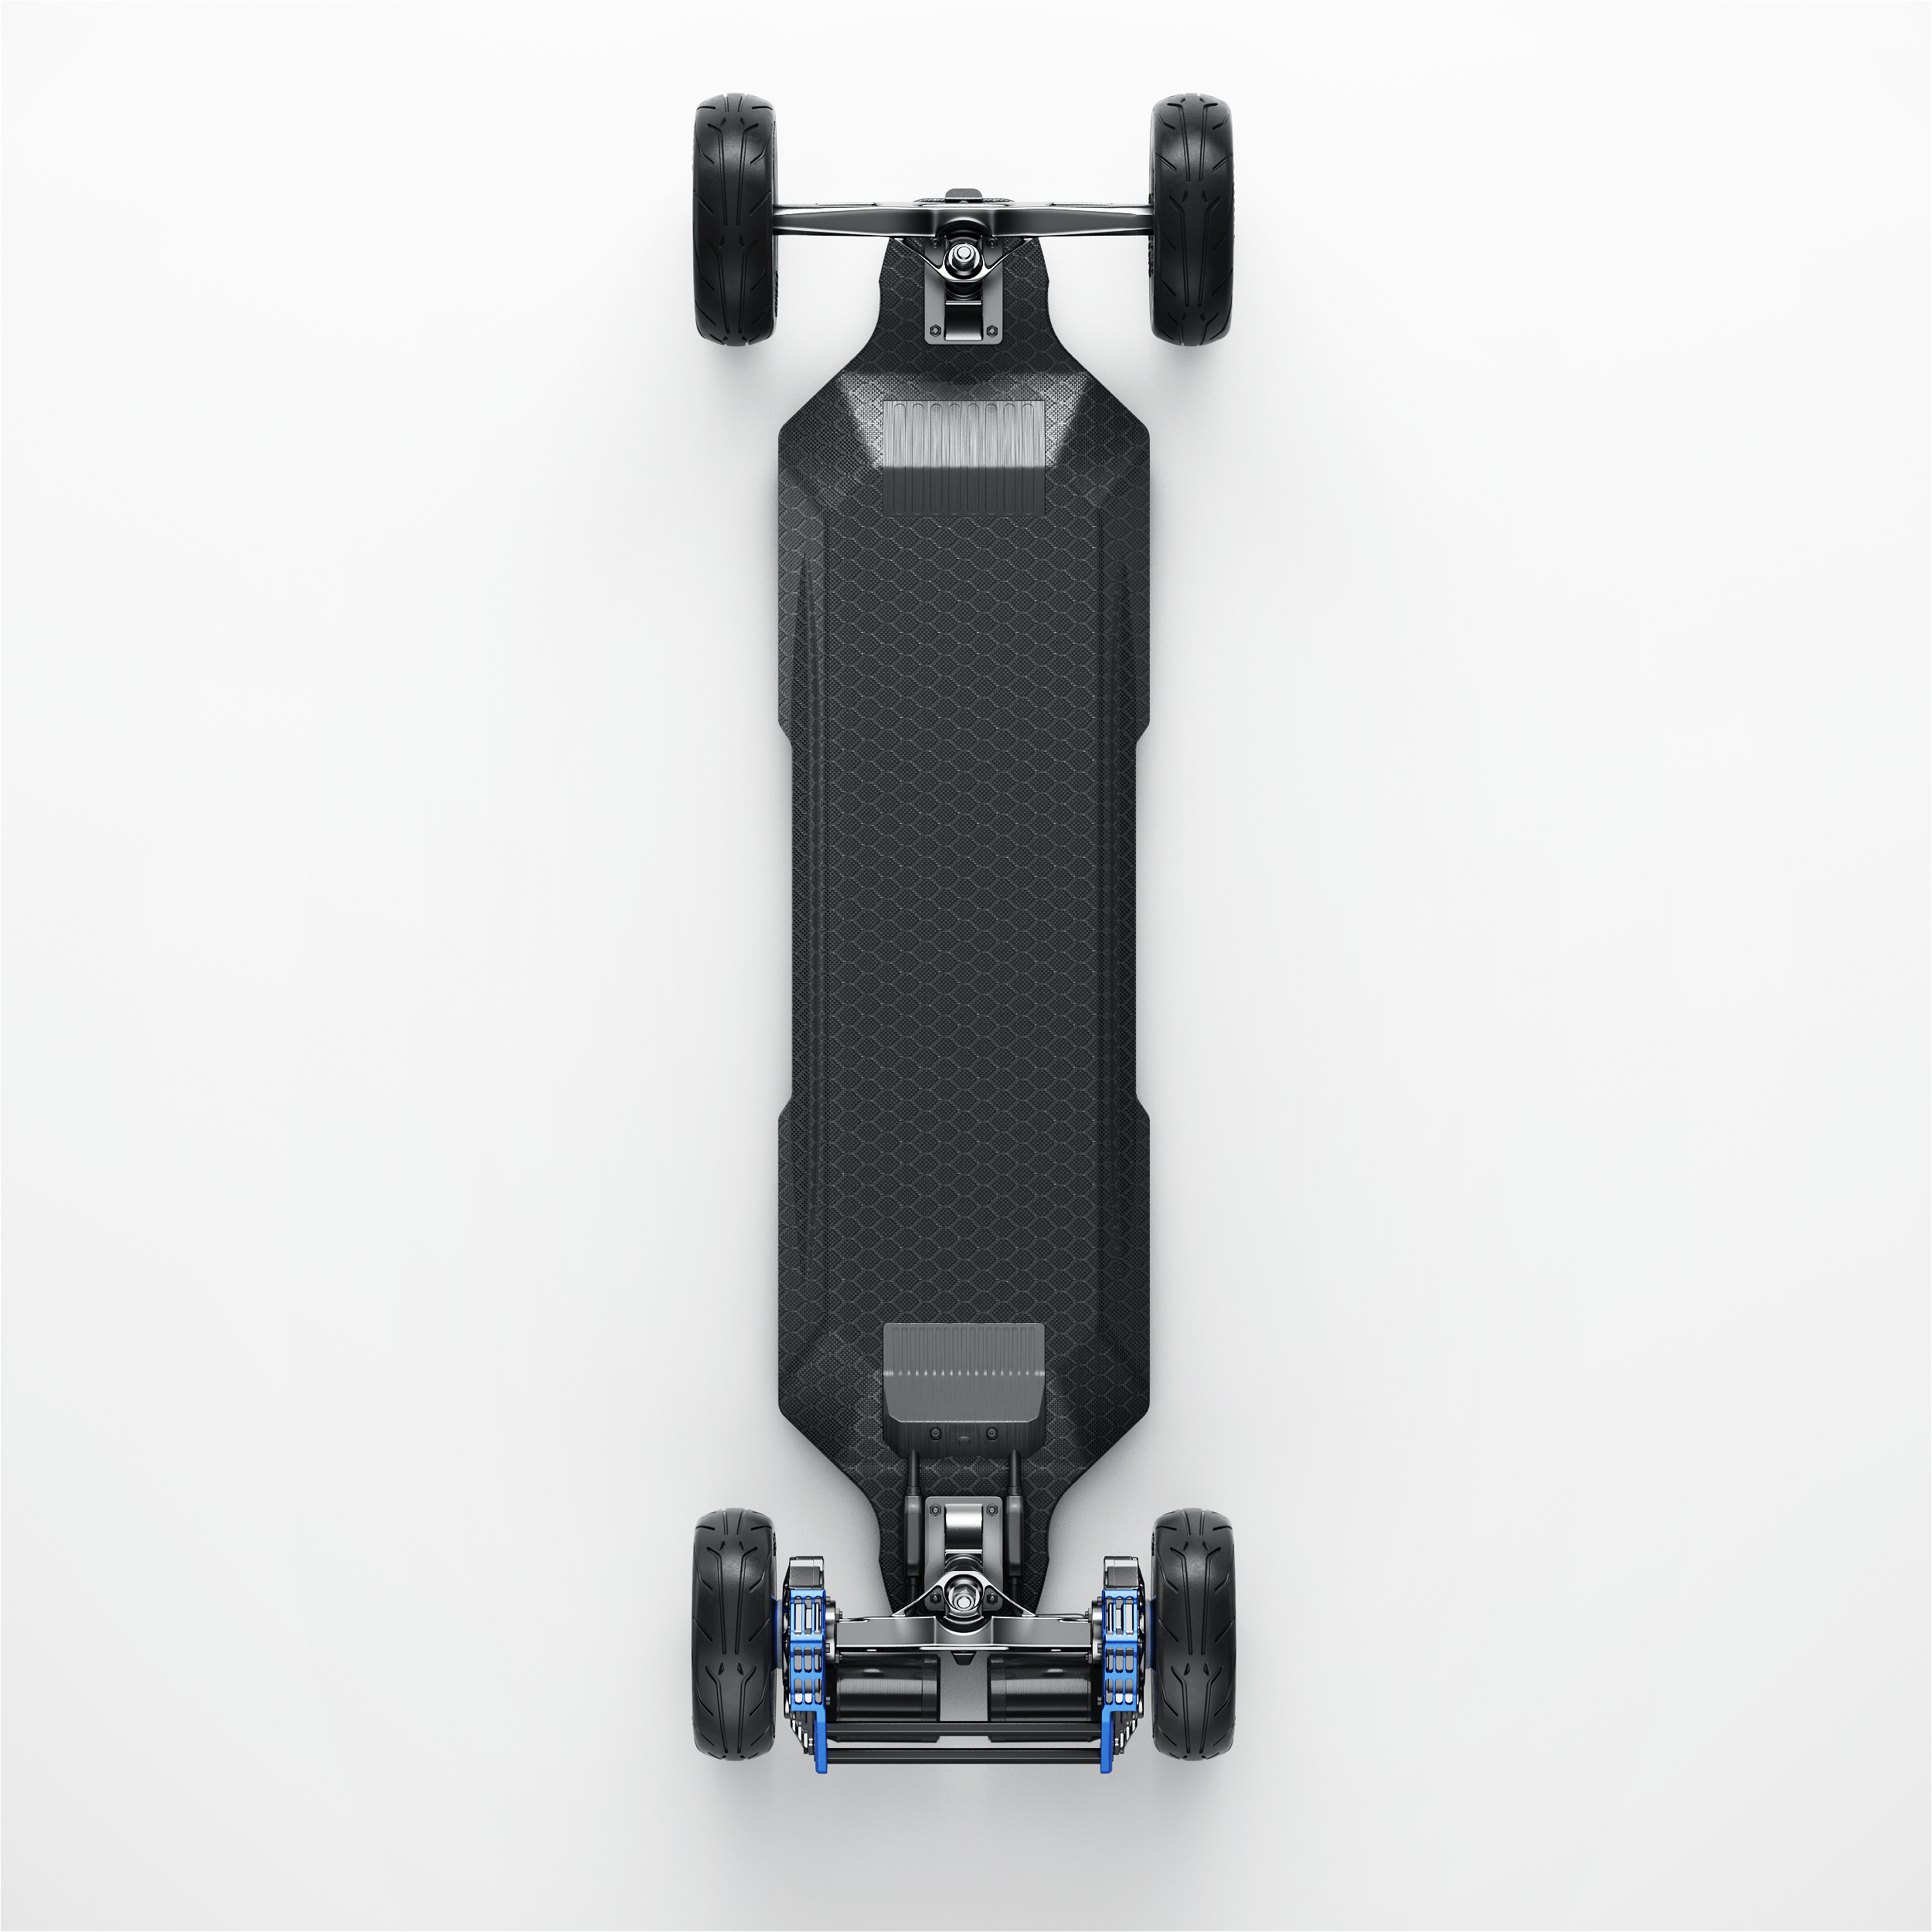 Acedeck® Ares X1 All Terrain Electric Skateboard-Gear drive